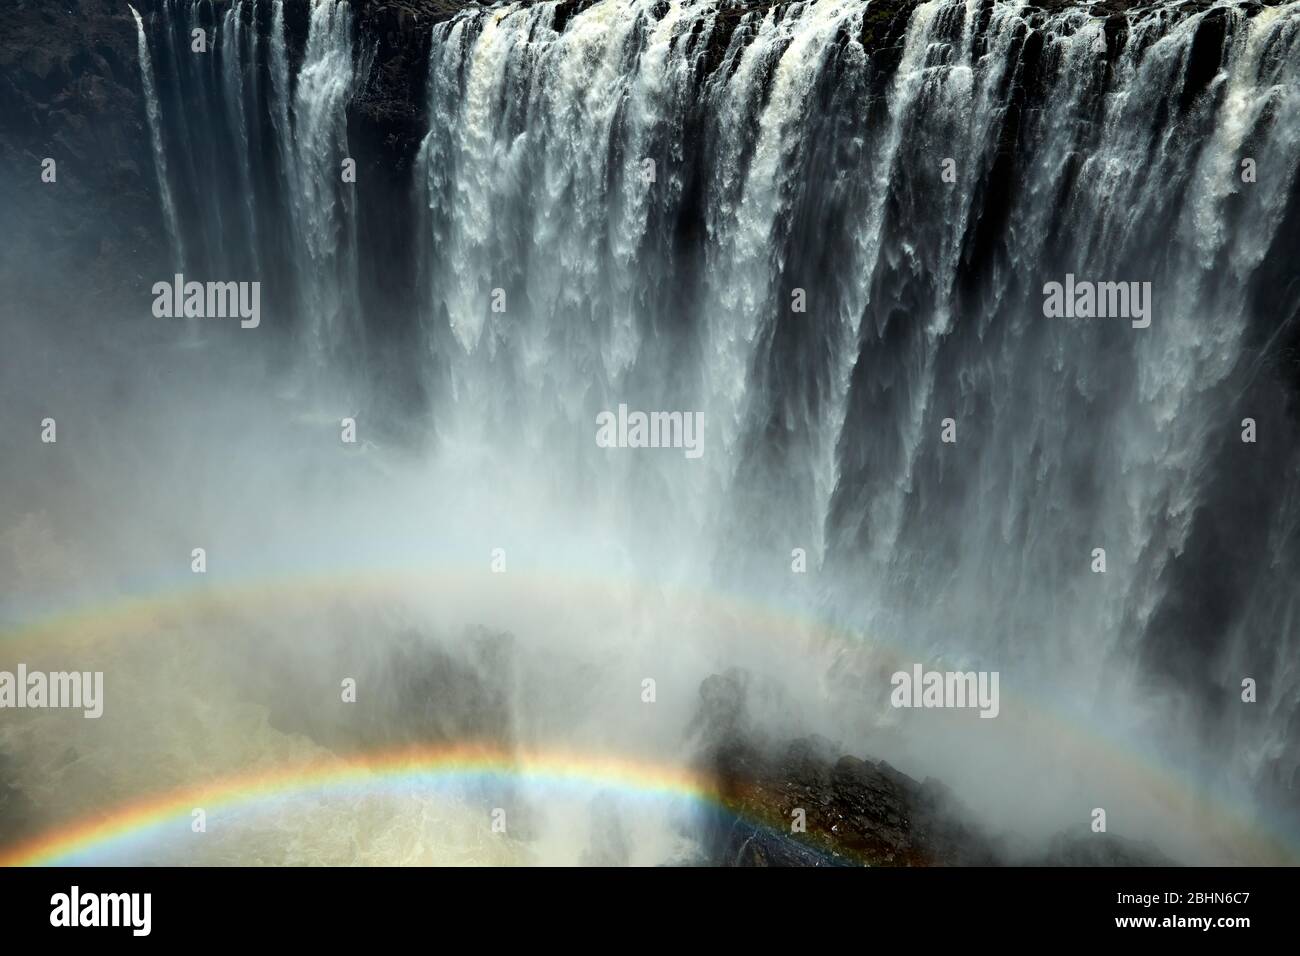 Victoria Falls oder "mosi-oa-Tunya" (der Rauch, der donnert), und Regenbogen, Zambezi River, Simbabwe / Zambia Grenze, Südafrika Stockfoto